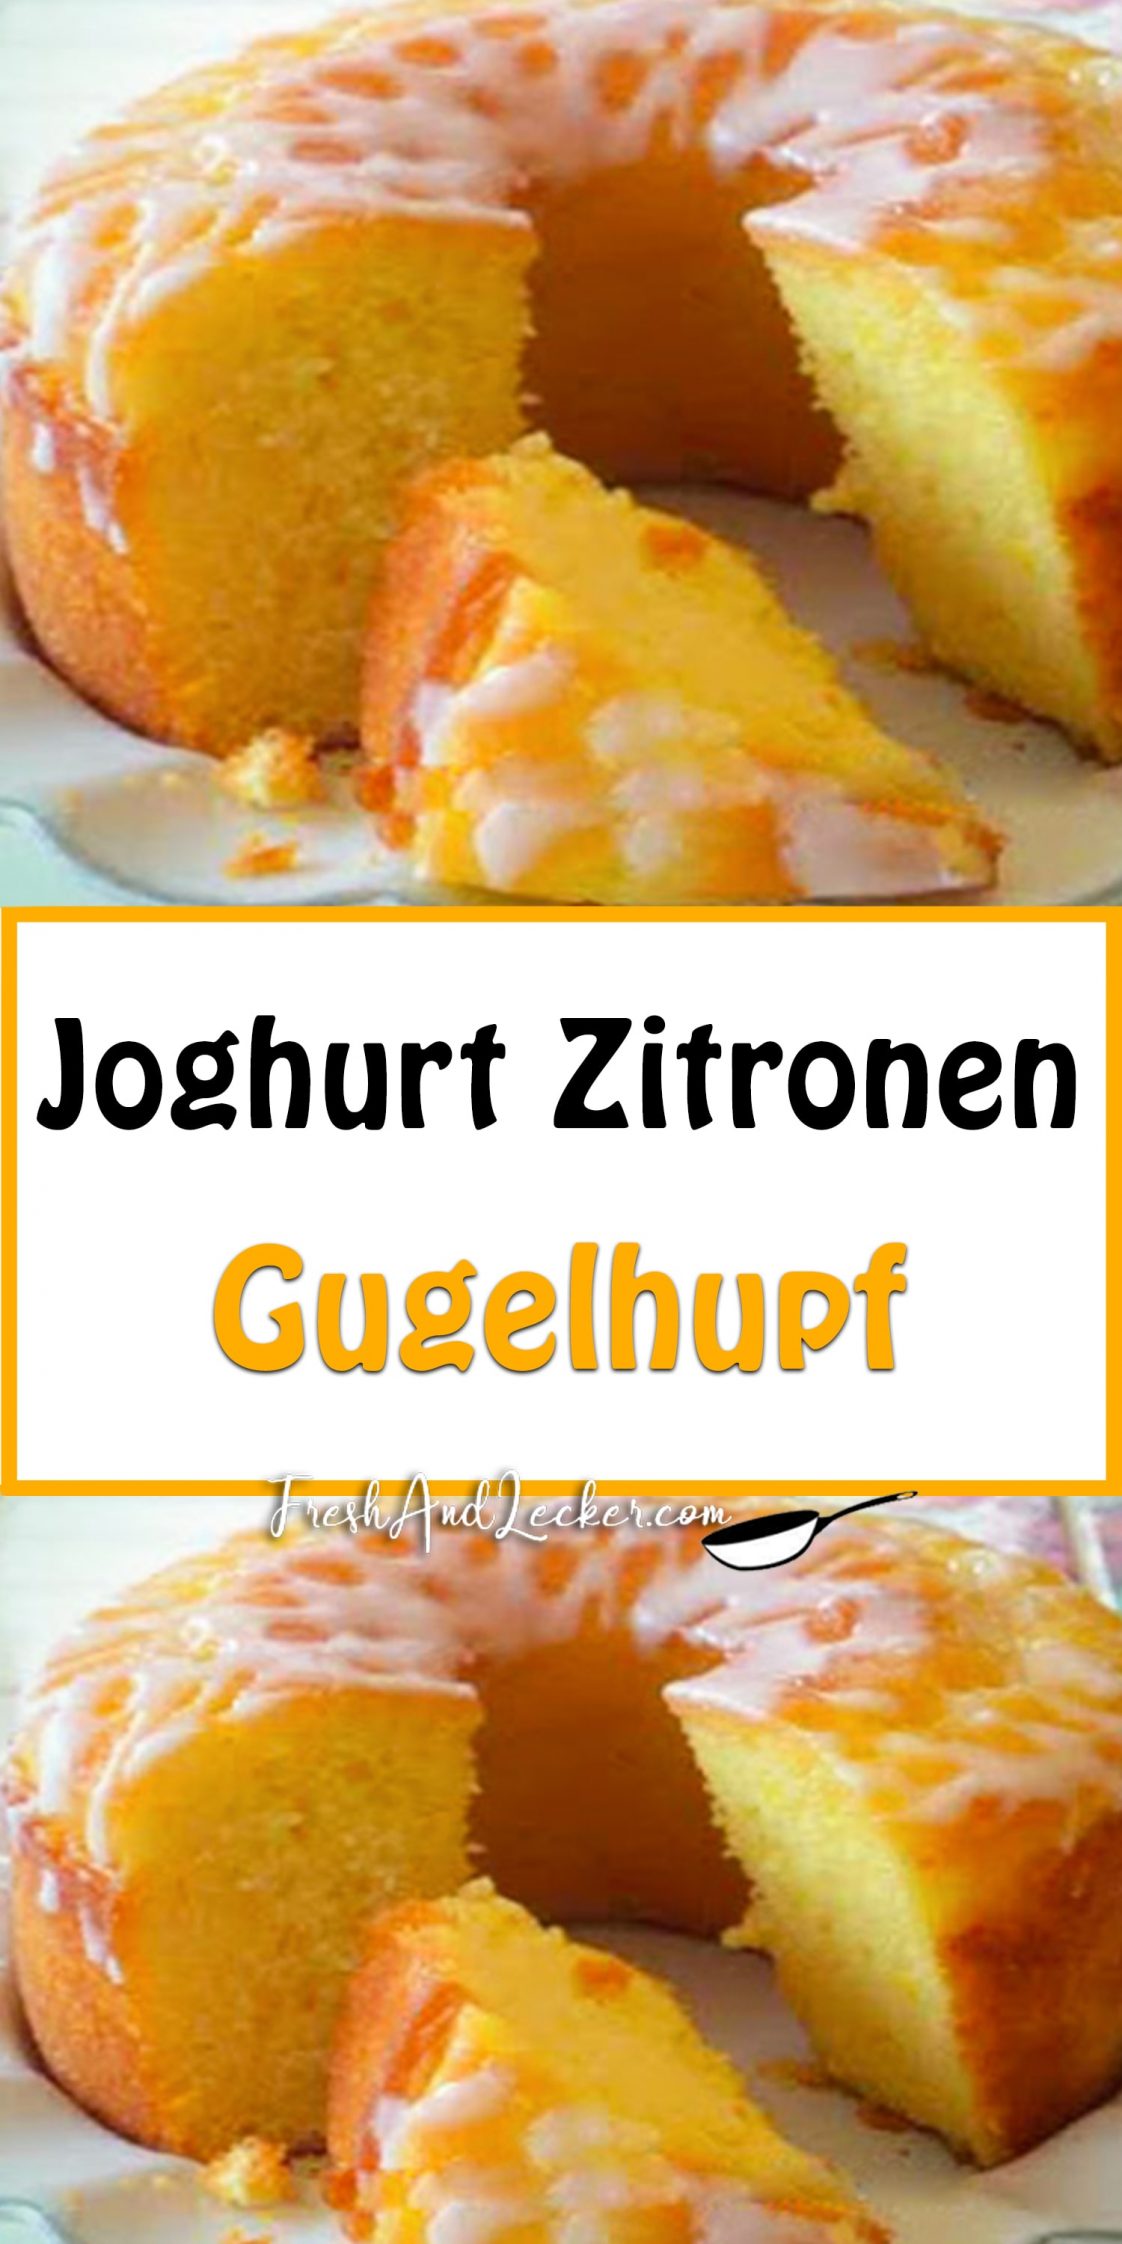 Joghurt Zitronen Gugelhupf - Fresh Lecker